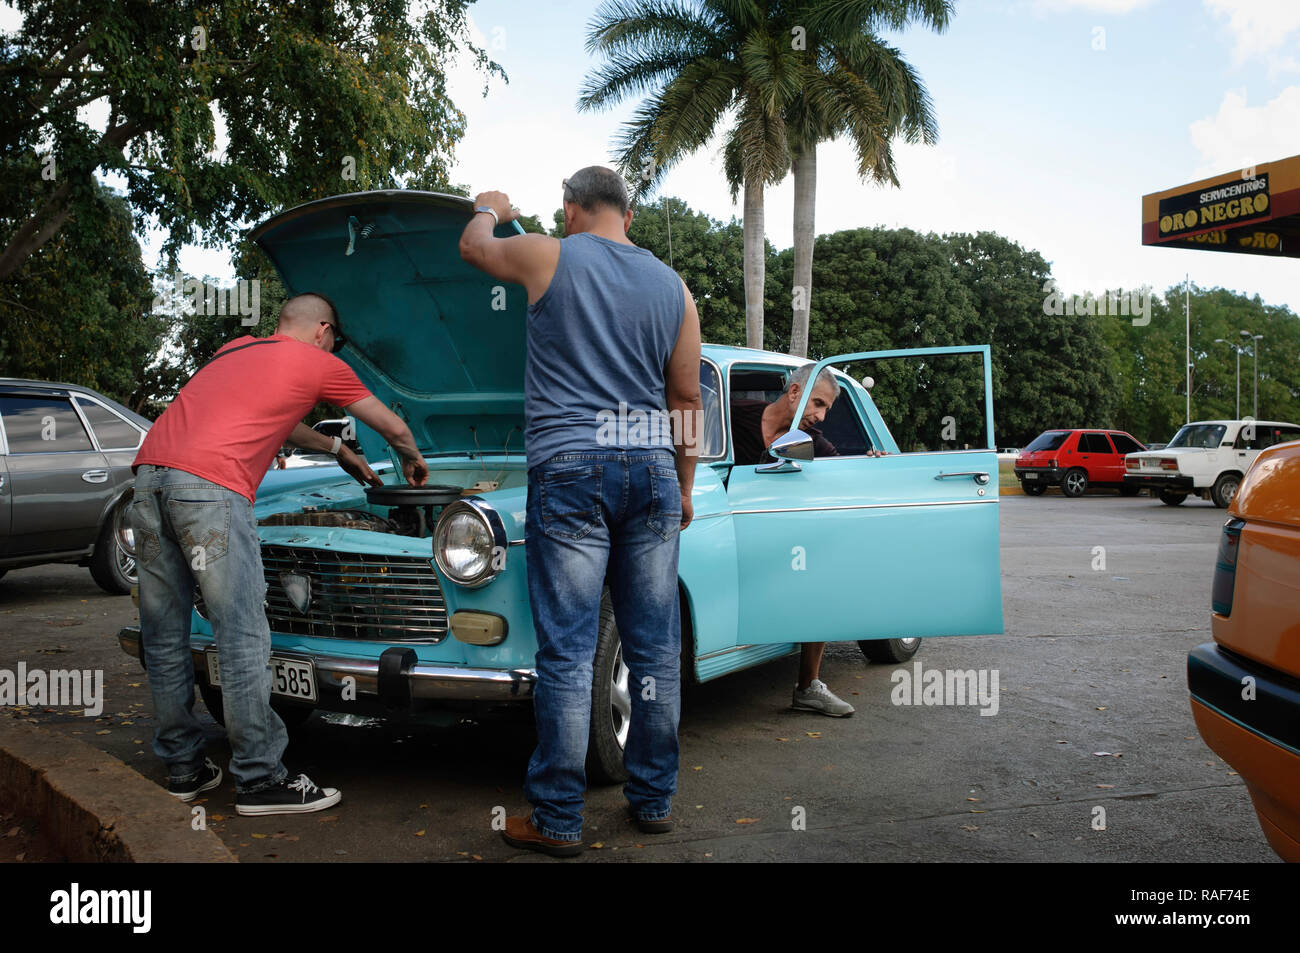 Man arranging a broken down car on a petrol station parking lot, Cuba Stock Photo